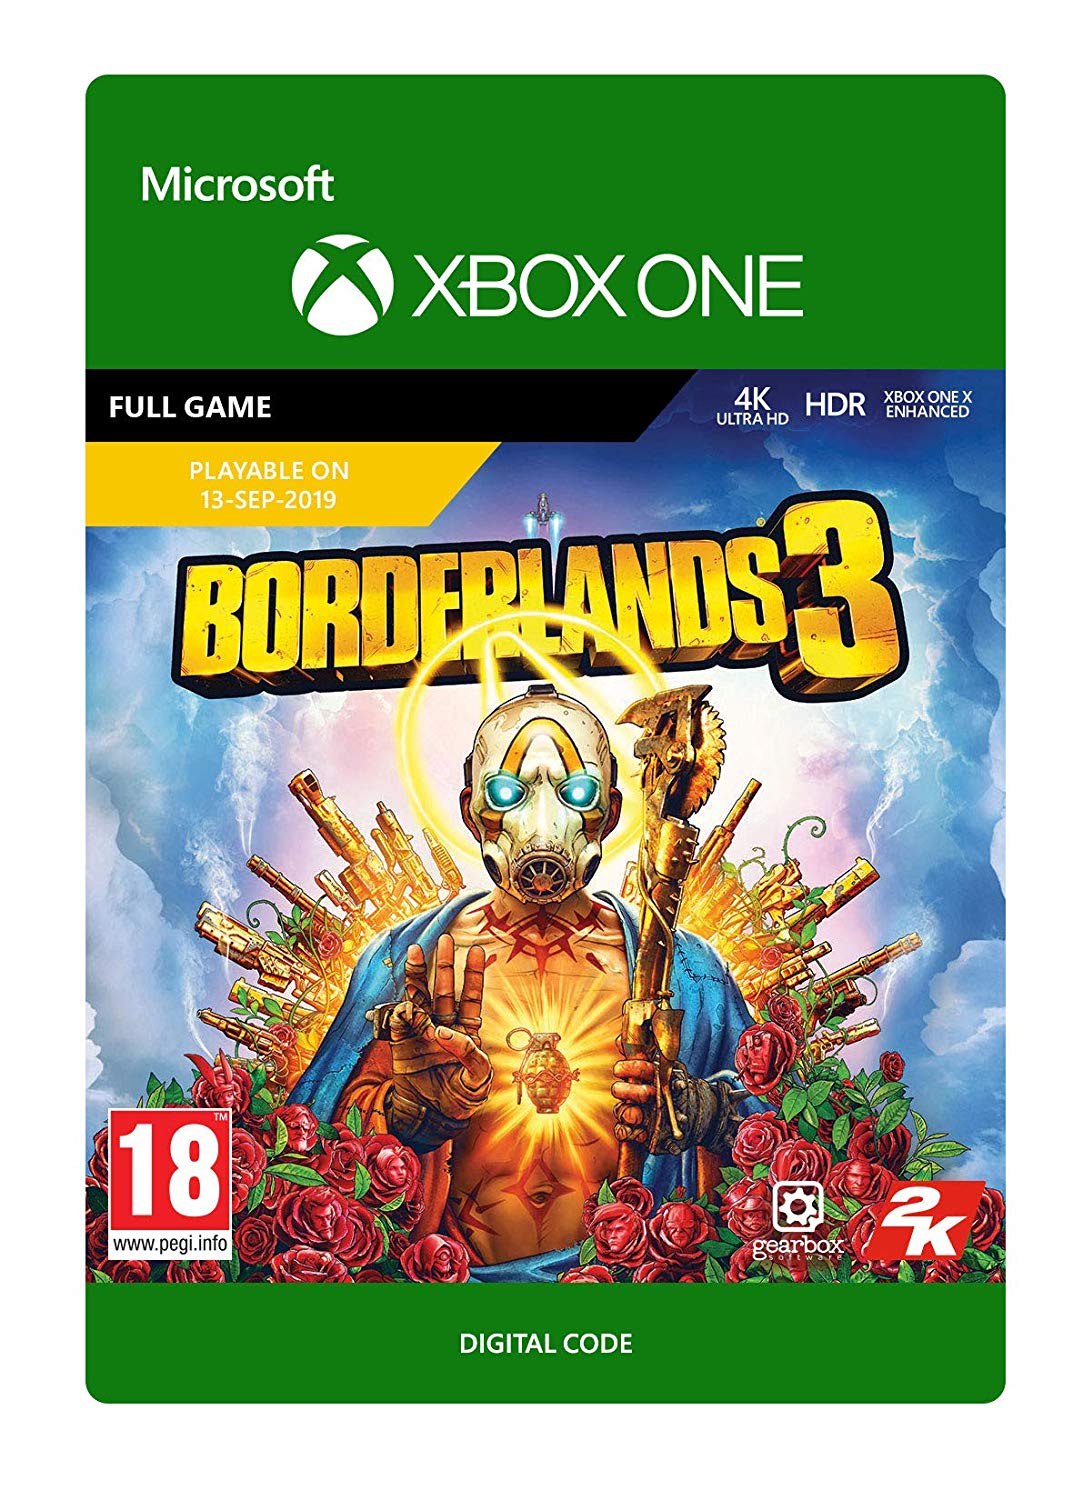 Borderlands 3 Digital Download Key (Xbox One): United Kingdom